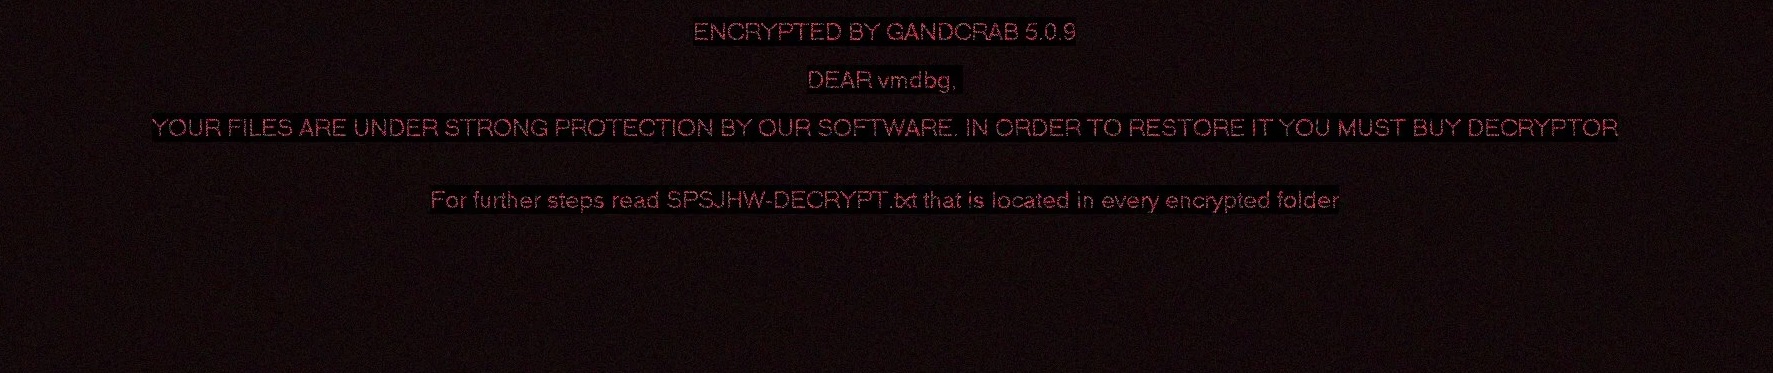 gandcrab 5.0.9 cryptovirus fondo de escritorio ransomware